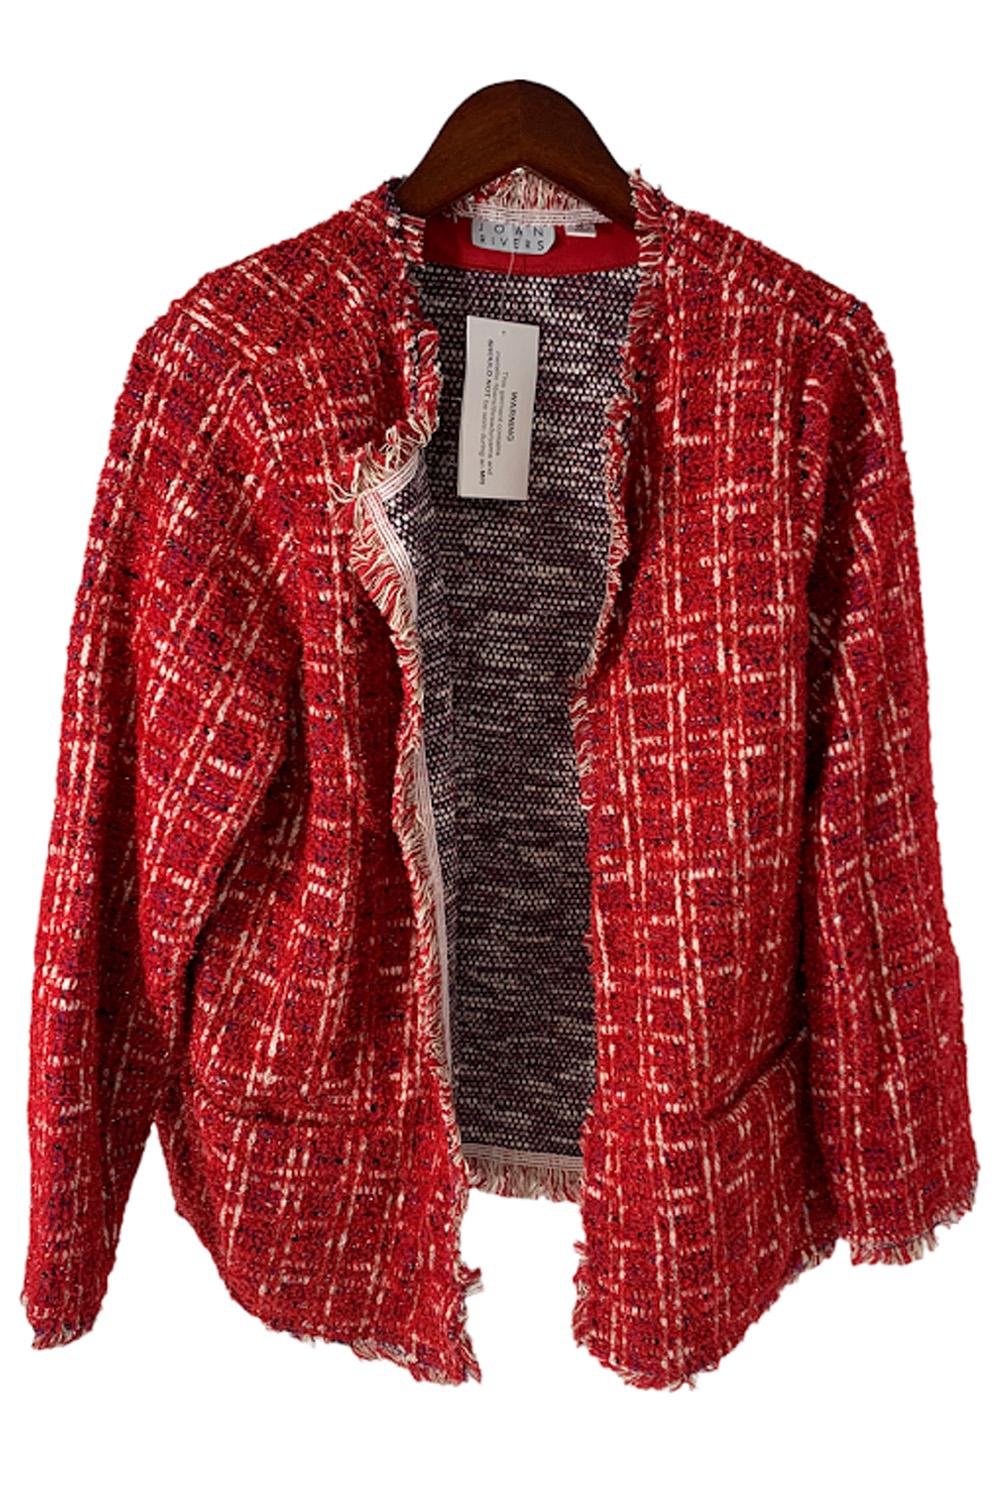 NWT Joan Rivers Ribbed Red Jacket Blazer Rhinestone Pearl Embellished Size  XS | eBay